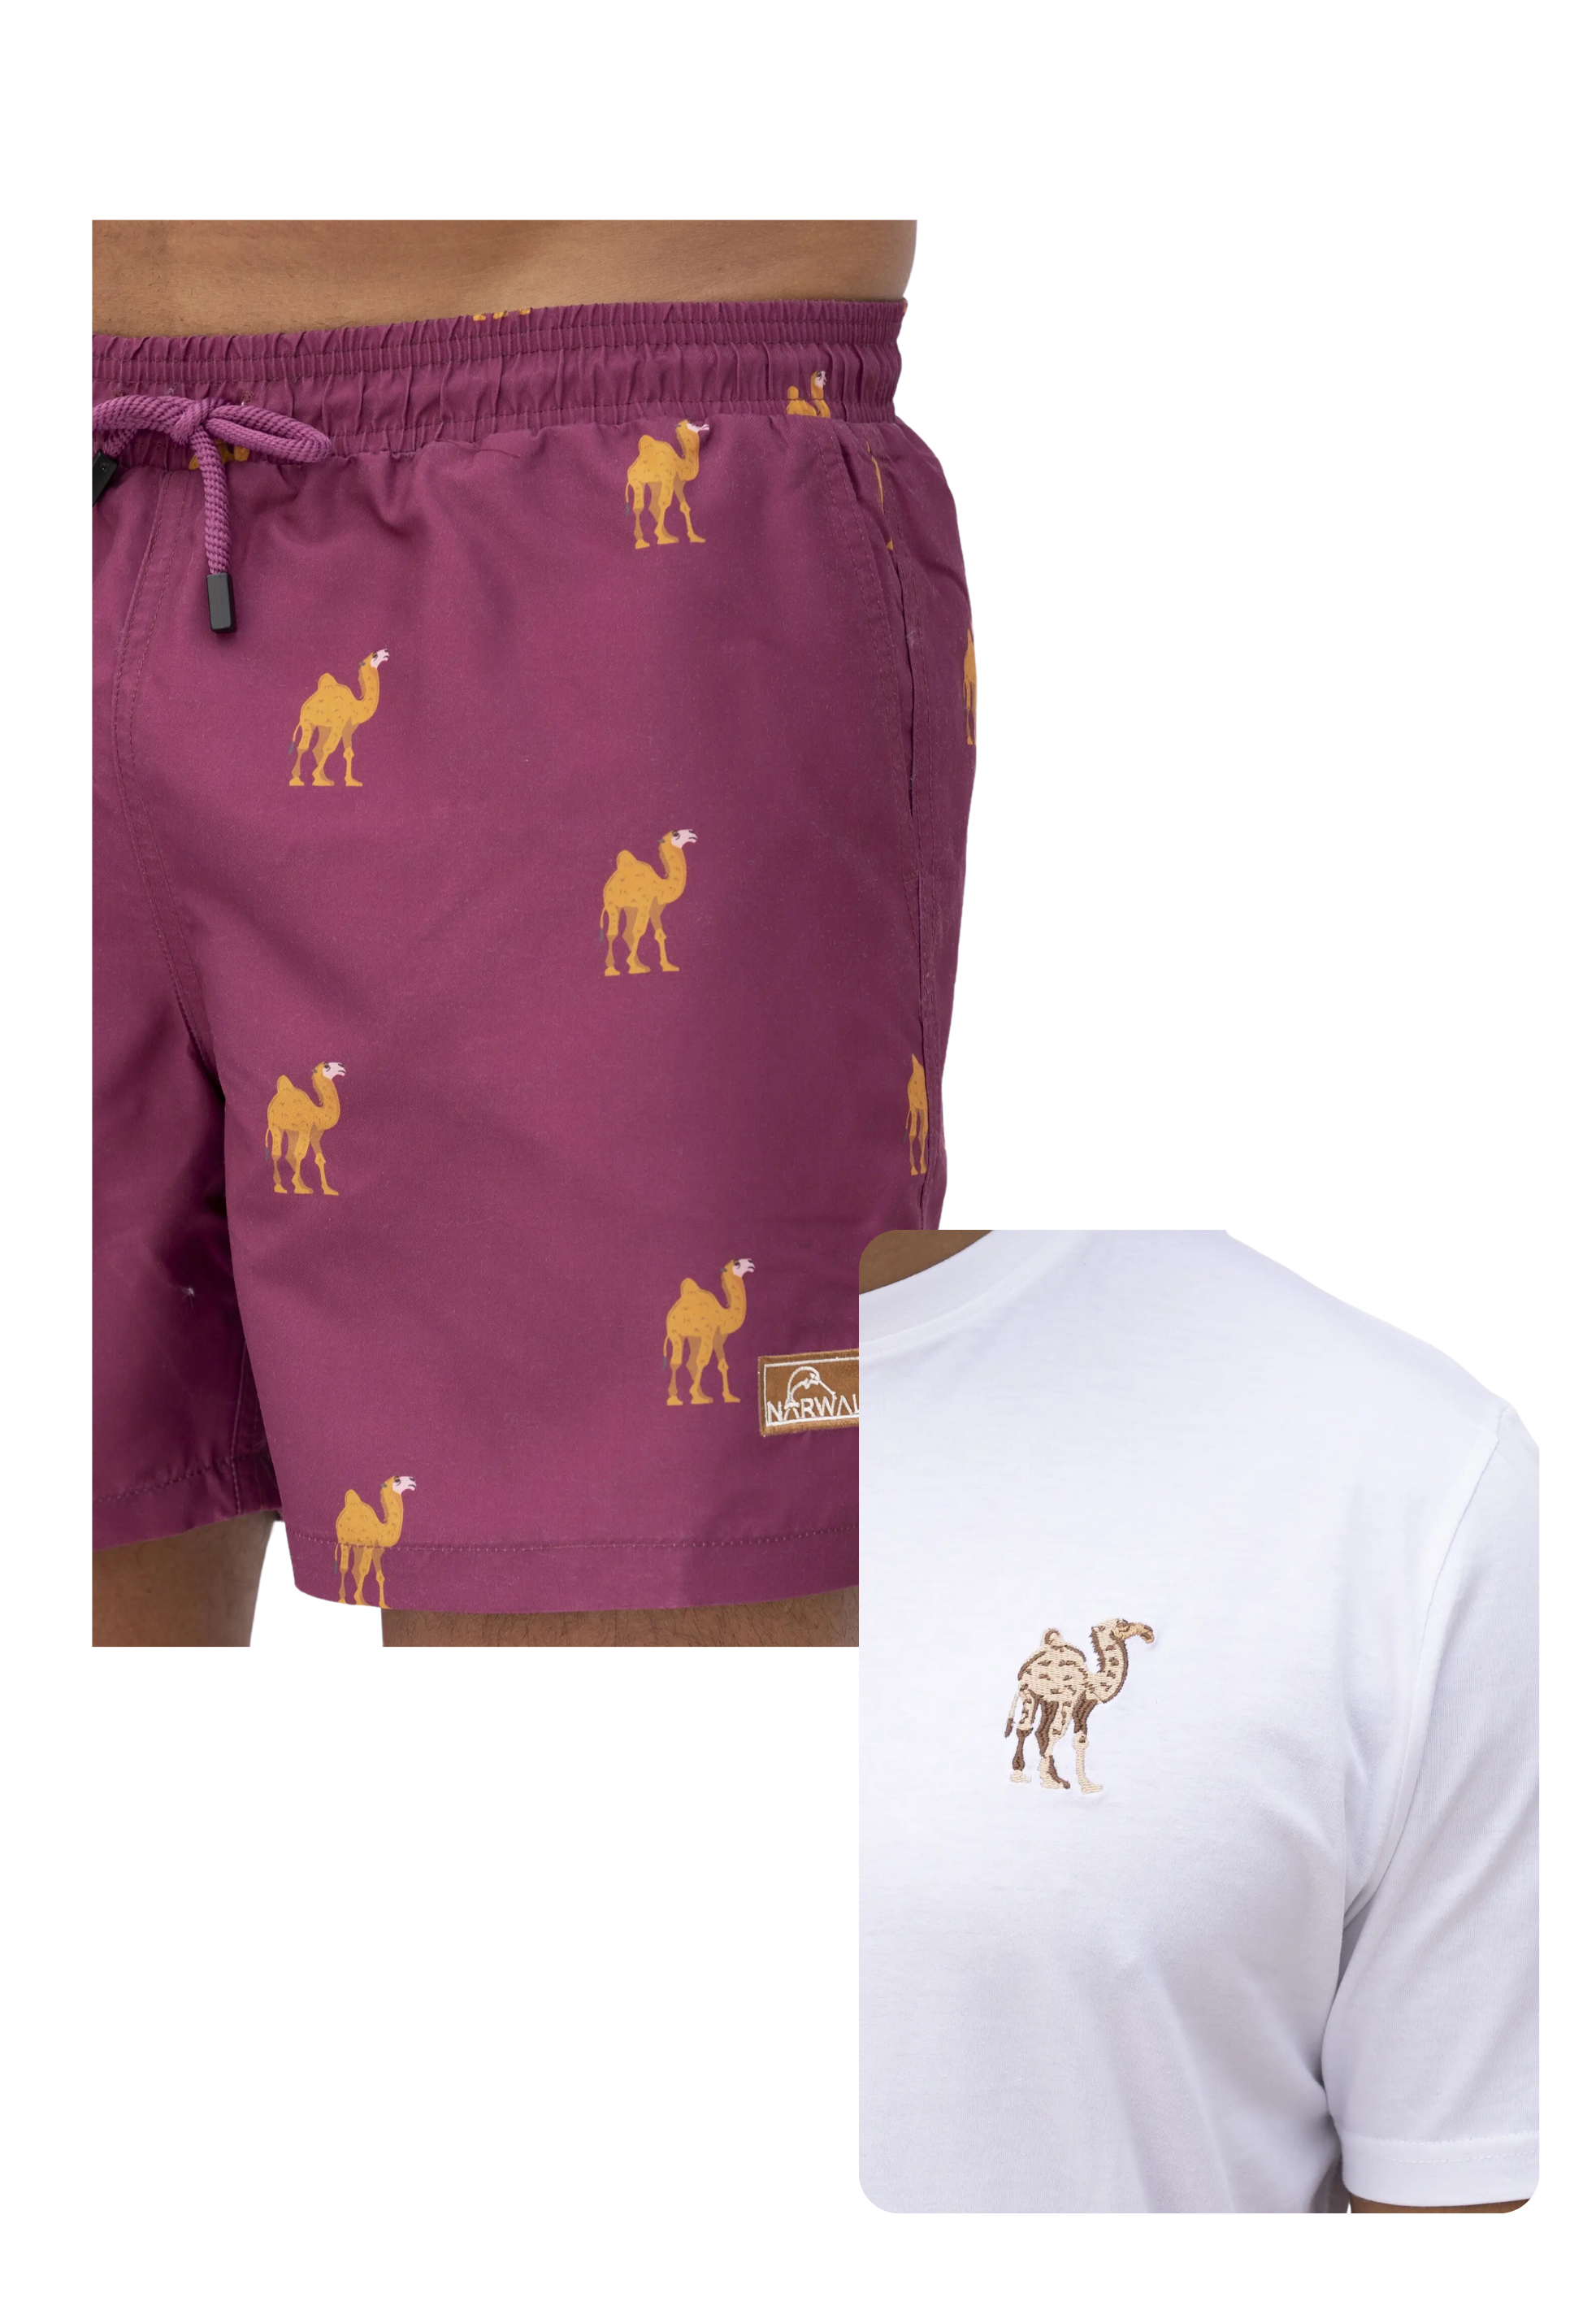 Camel Swim Trunks & T-shirt Bundle